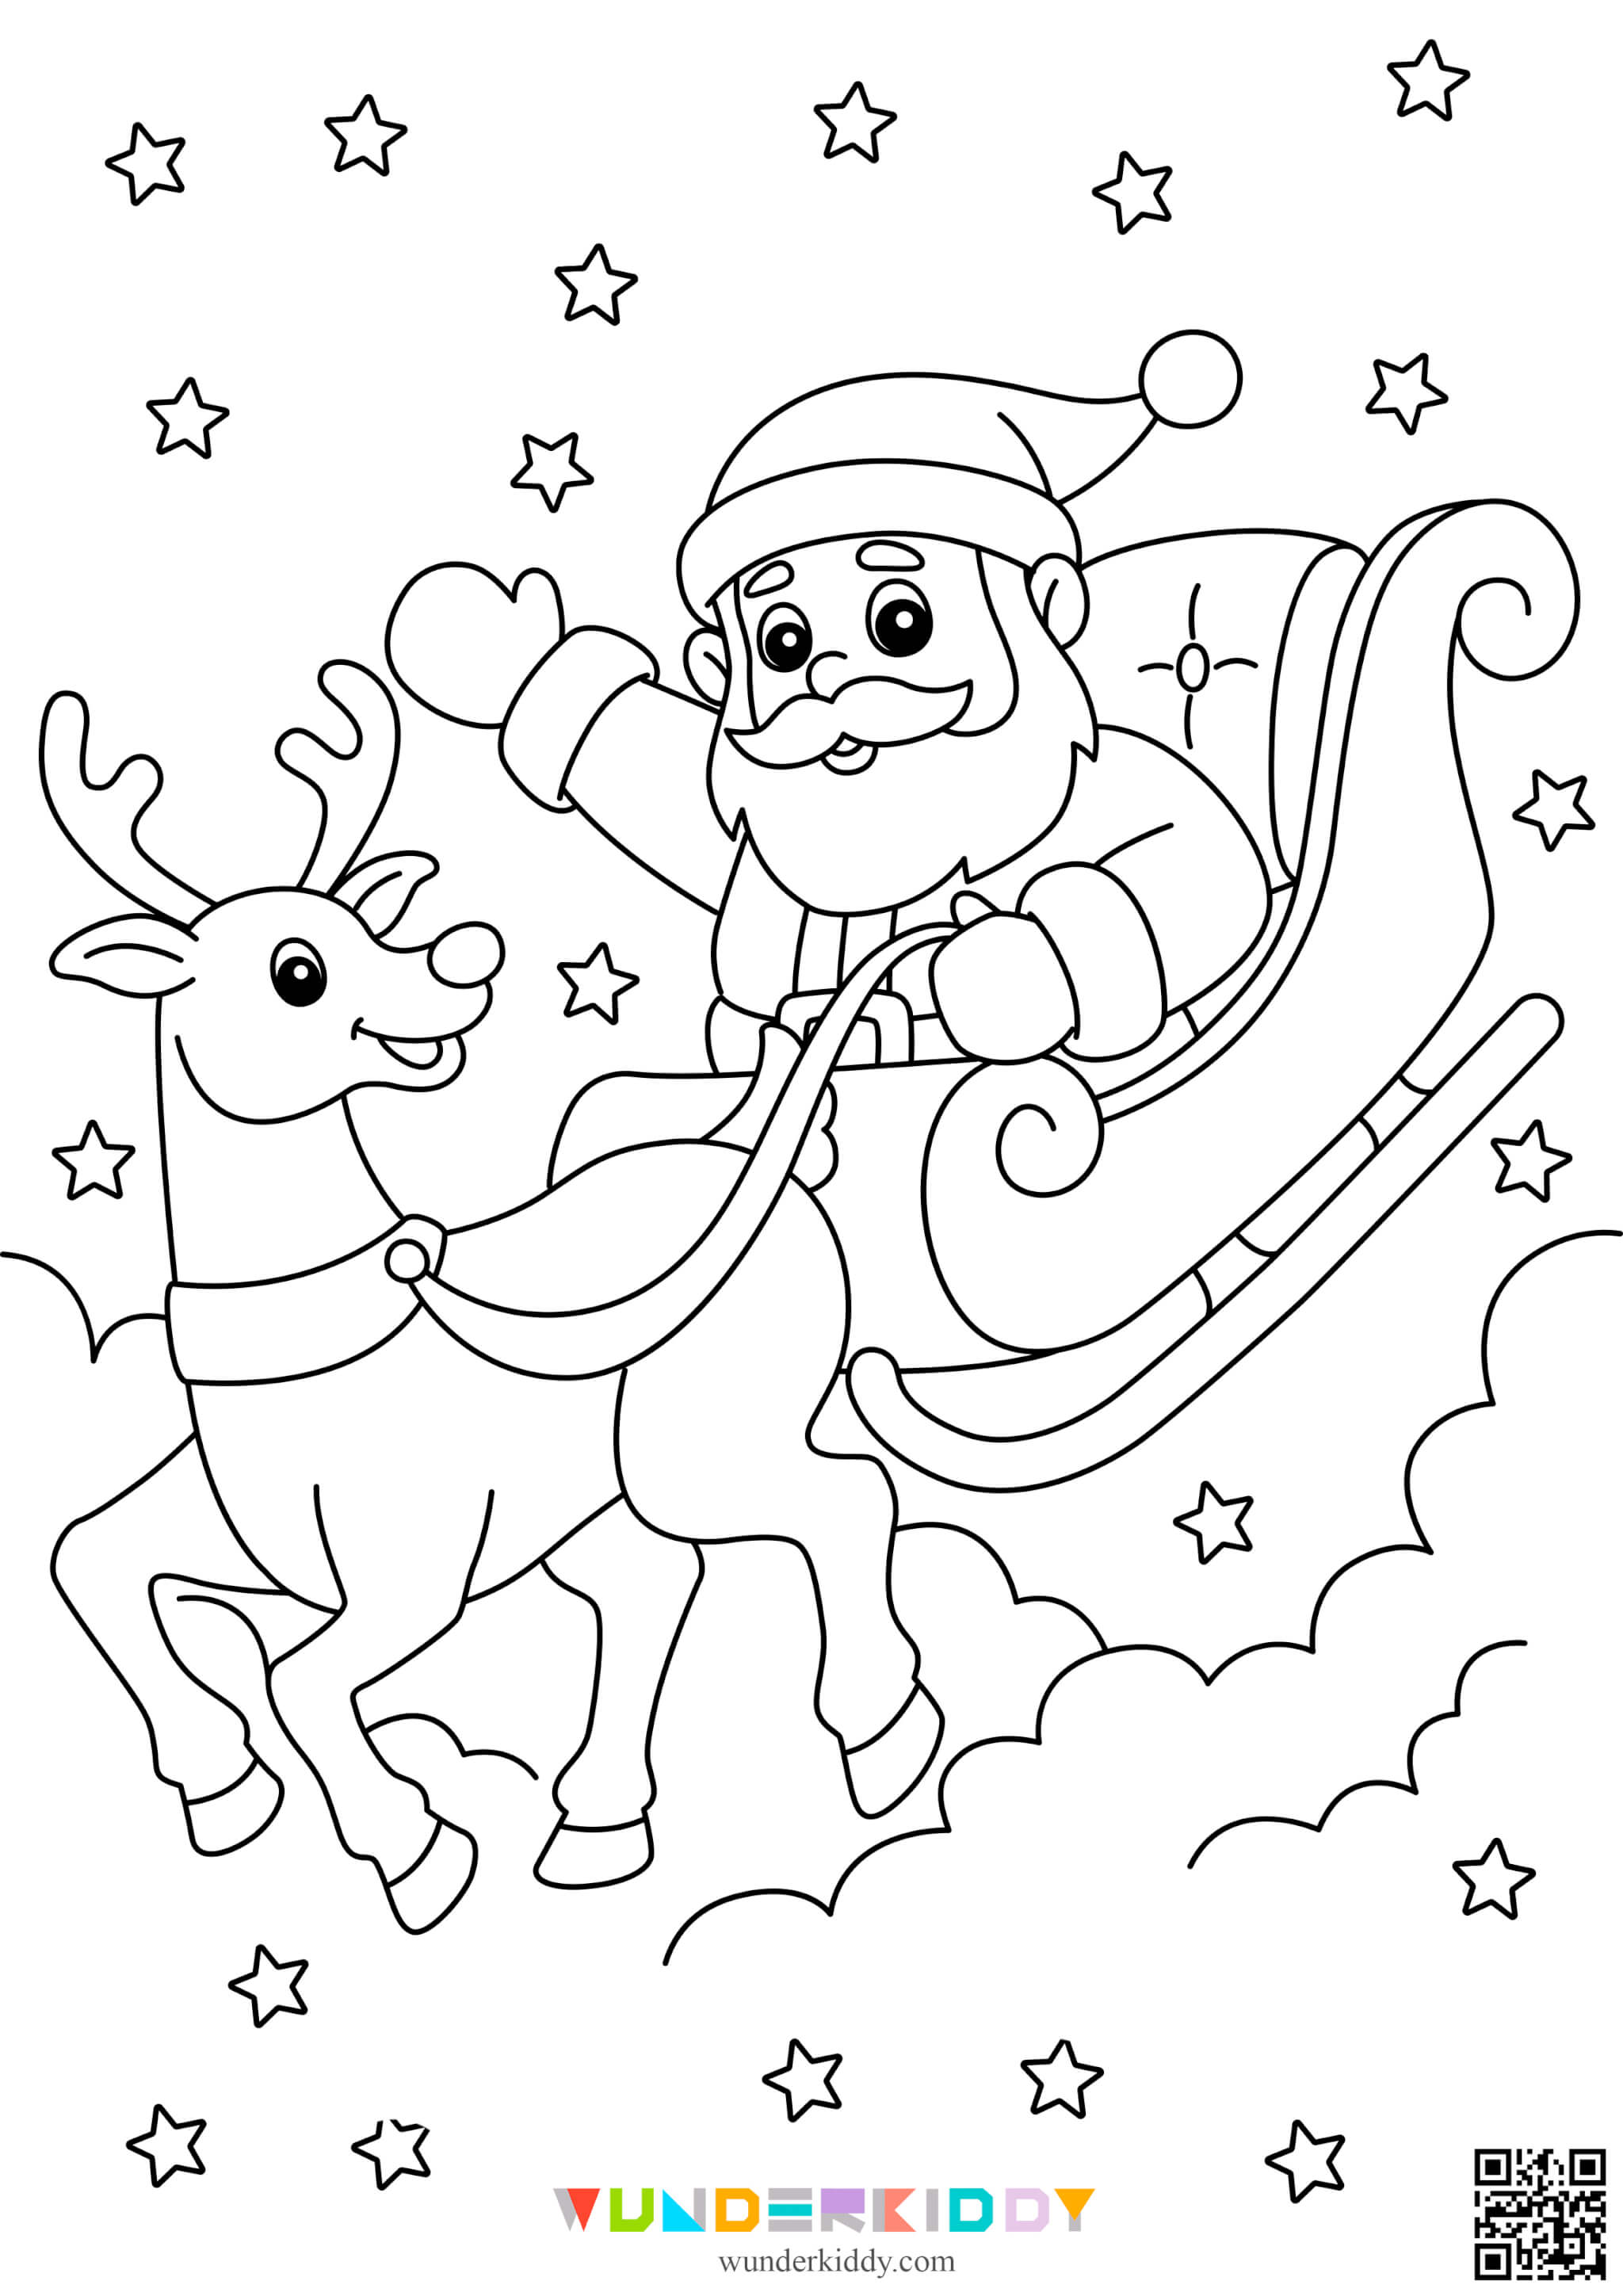 Santa Coloring Pages - Image 5